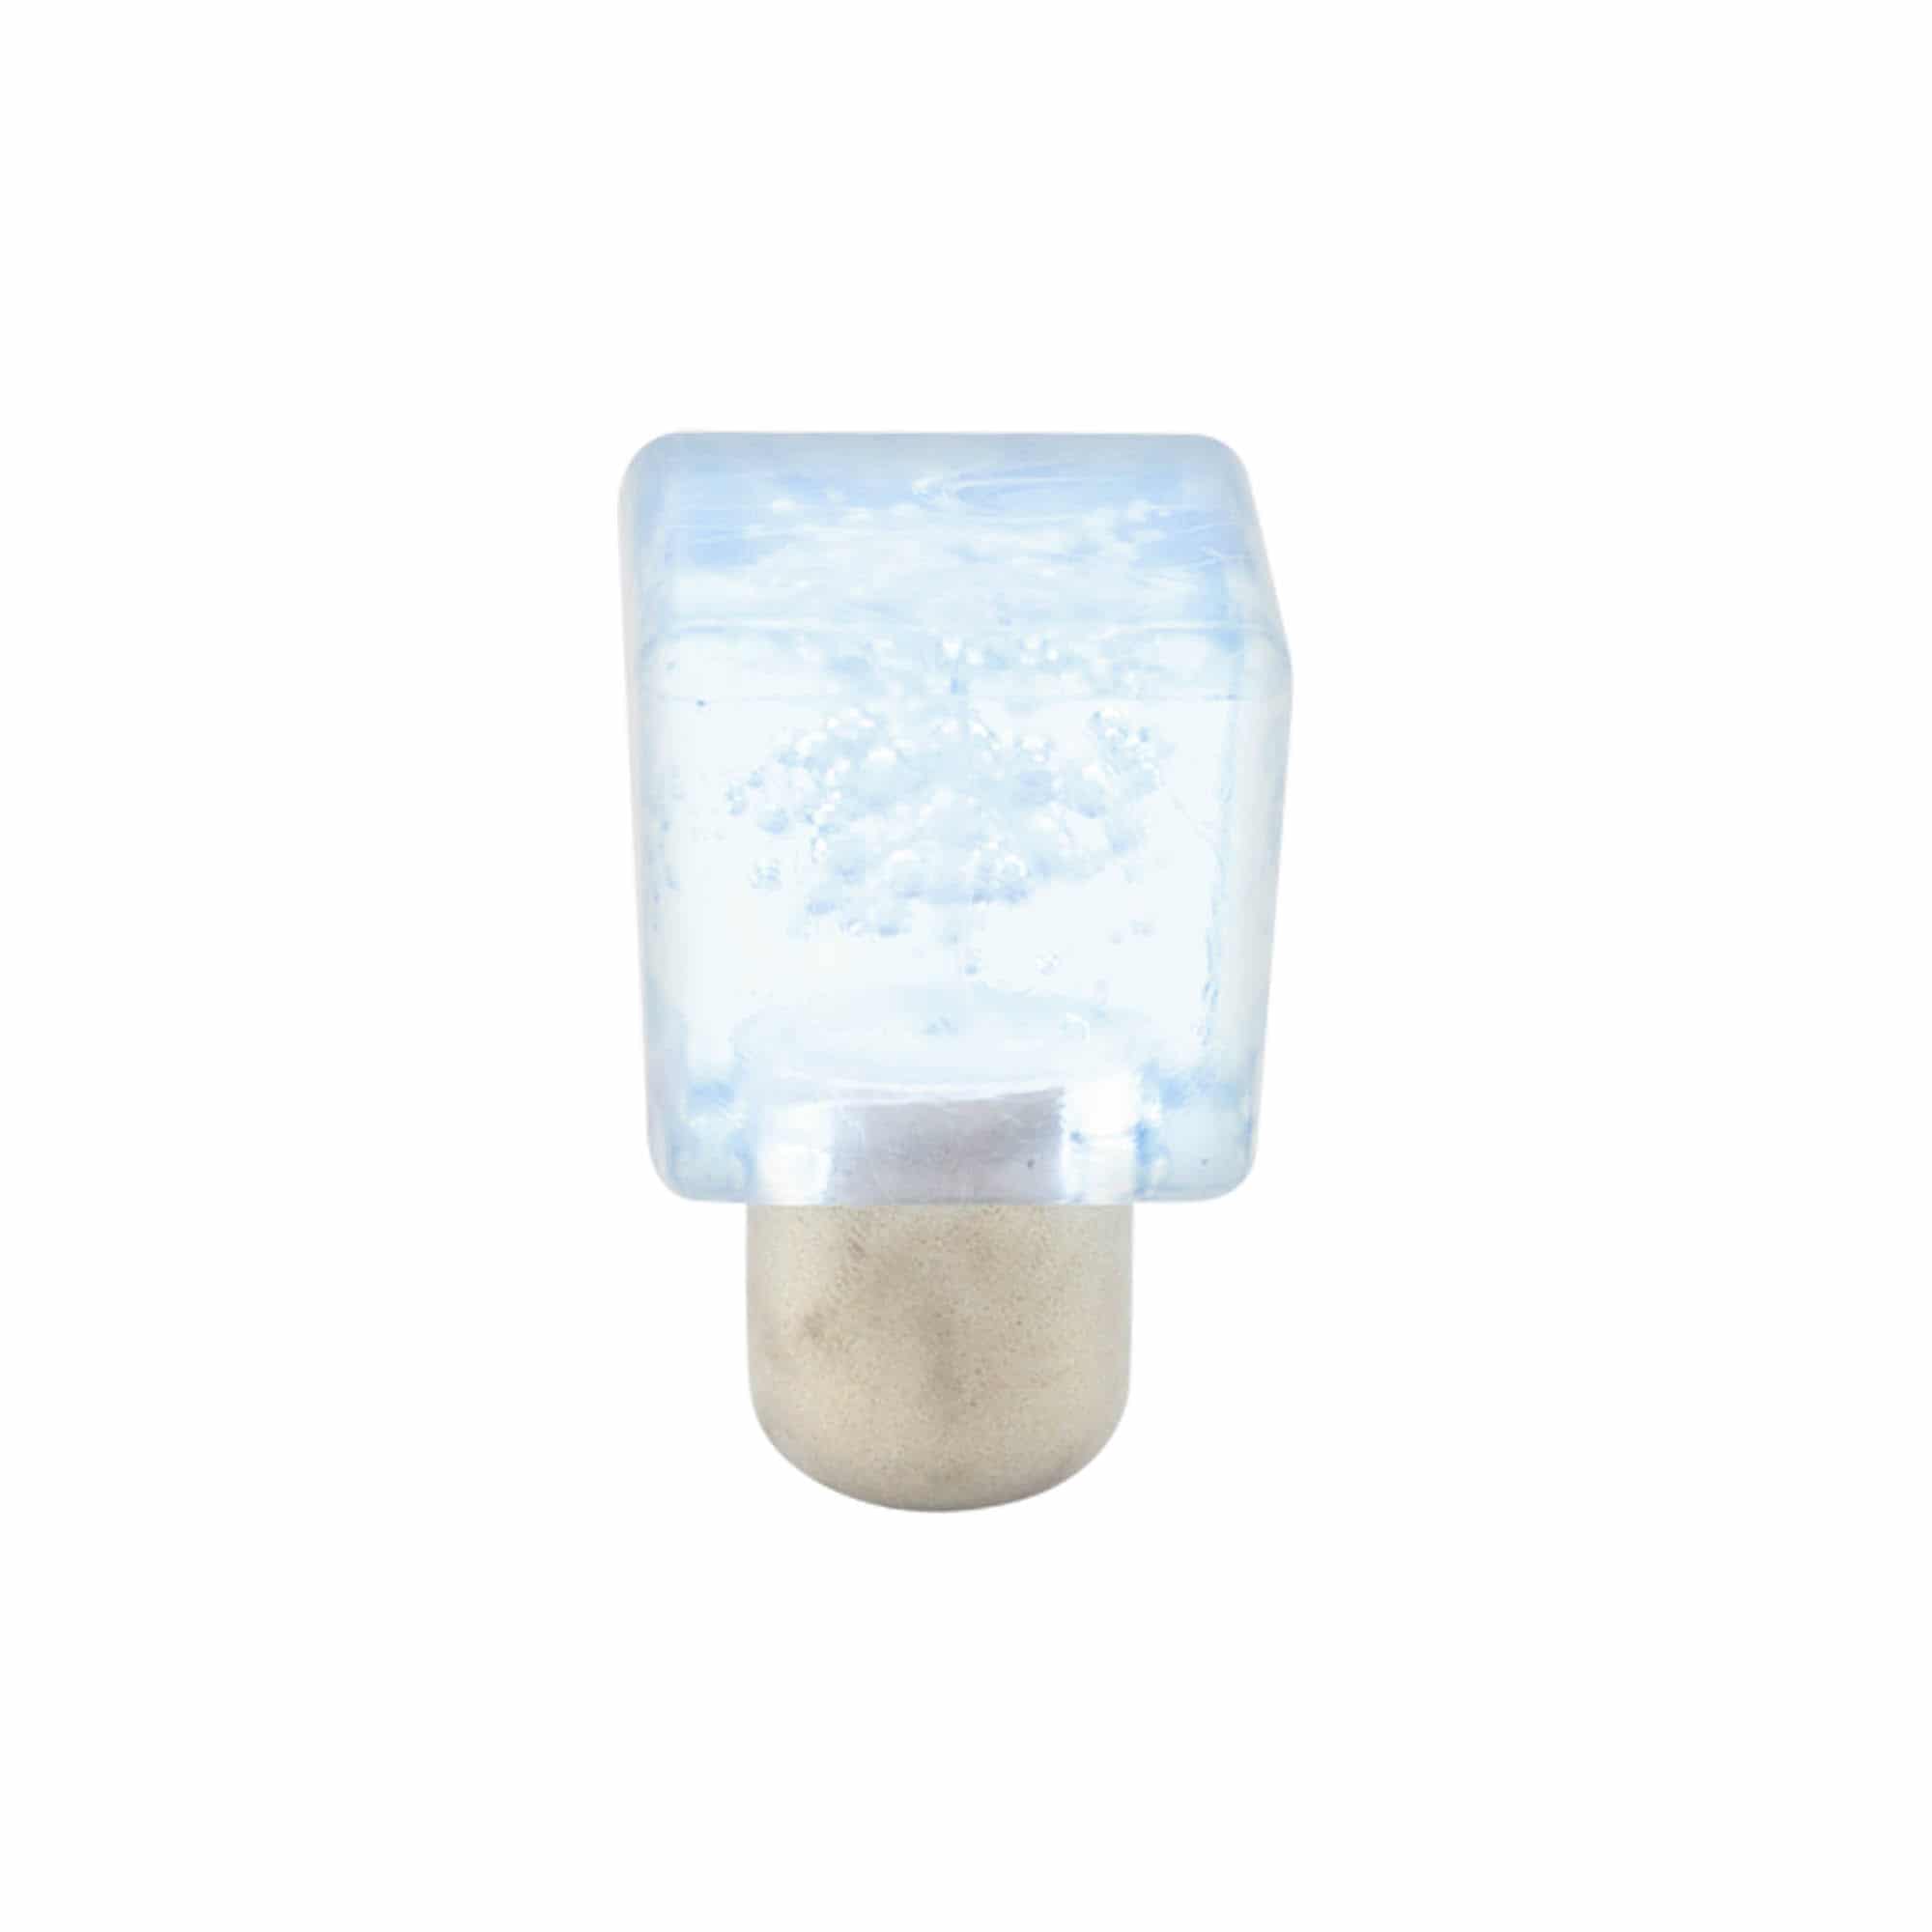 19 mm mushroom cork ‘Ice Cube’, plastic, blue, for opening: cork